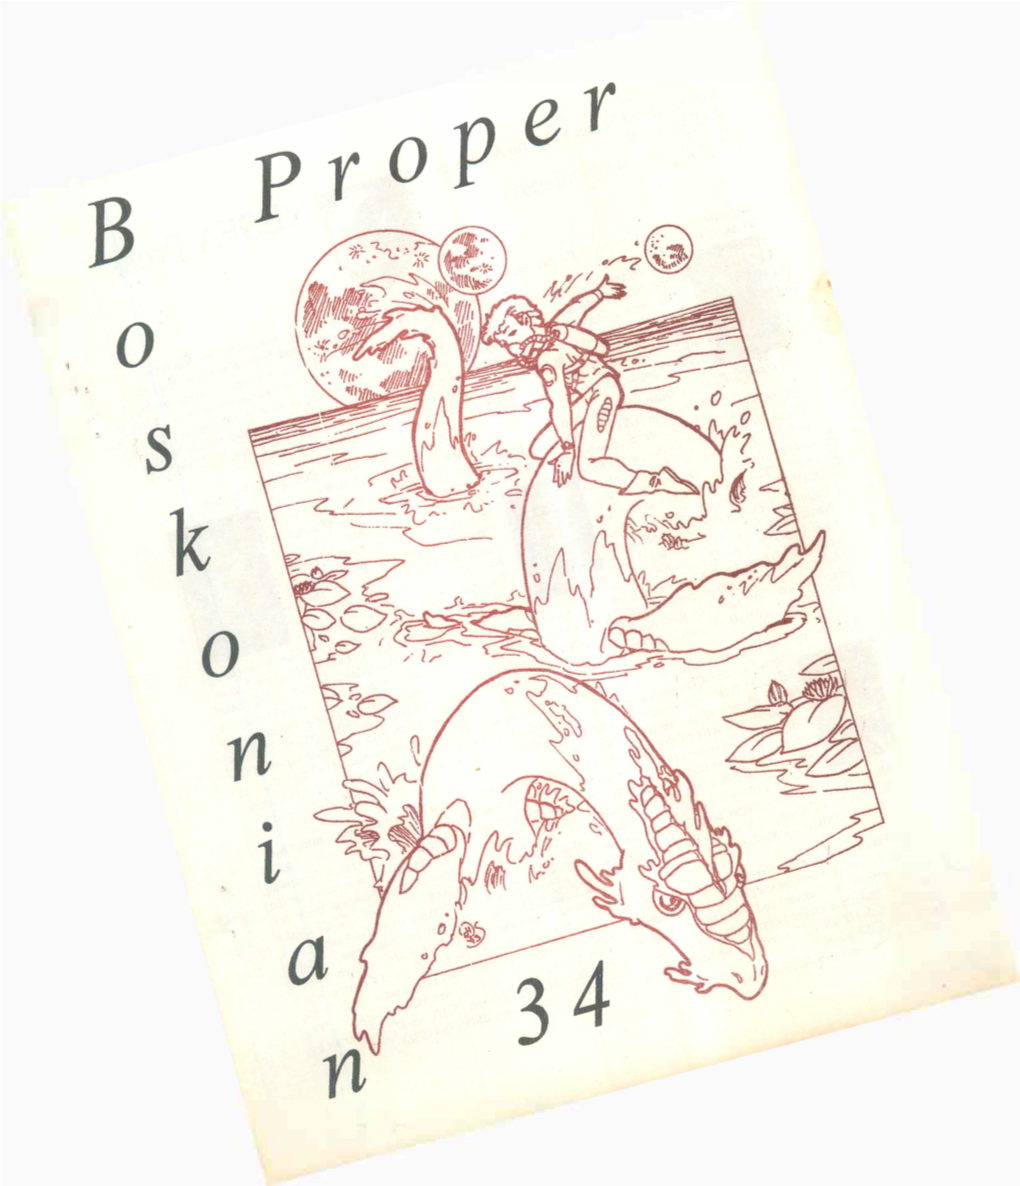 Proper Boskonian 34 June 1995 Proper Boskonian Is the Semi-Annual Genzine of the New England Science Fiction Association